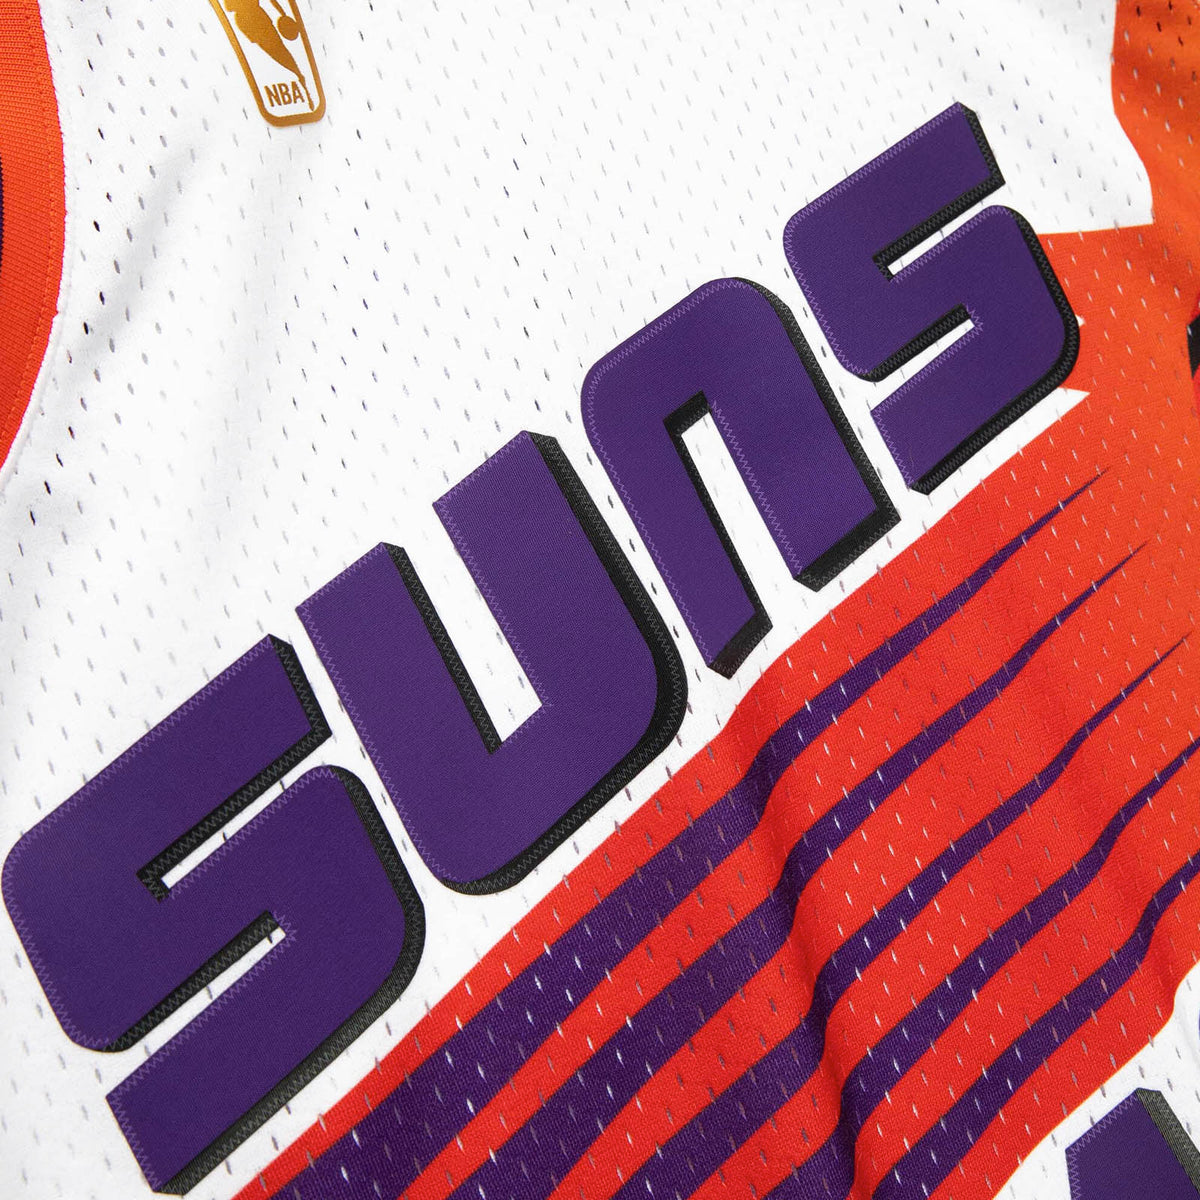 NEW XL Mitchell & Ness Steve Nash Phoenix Suns NBA Rookie Swingman  Jersey 96-97